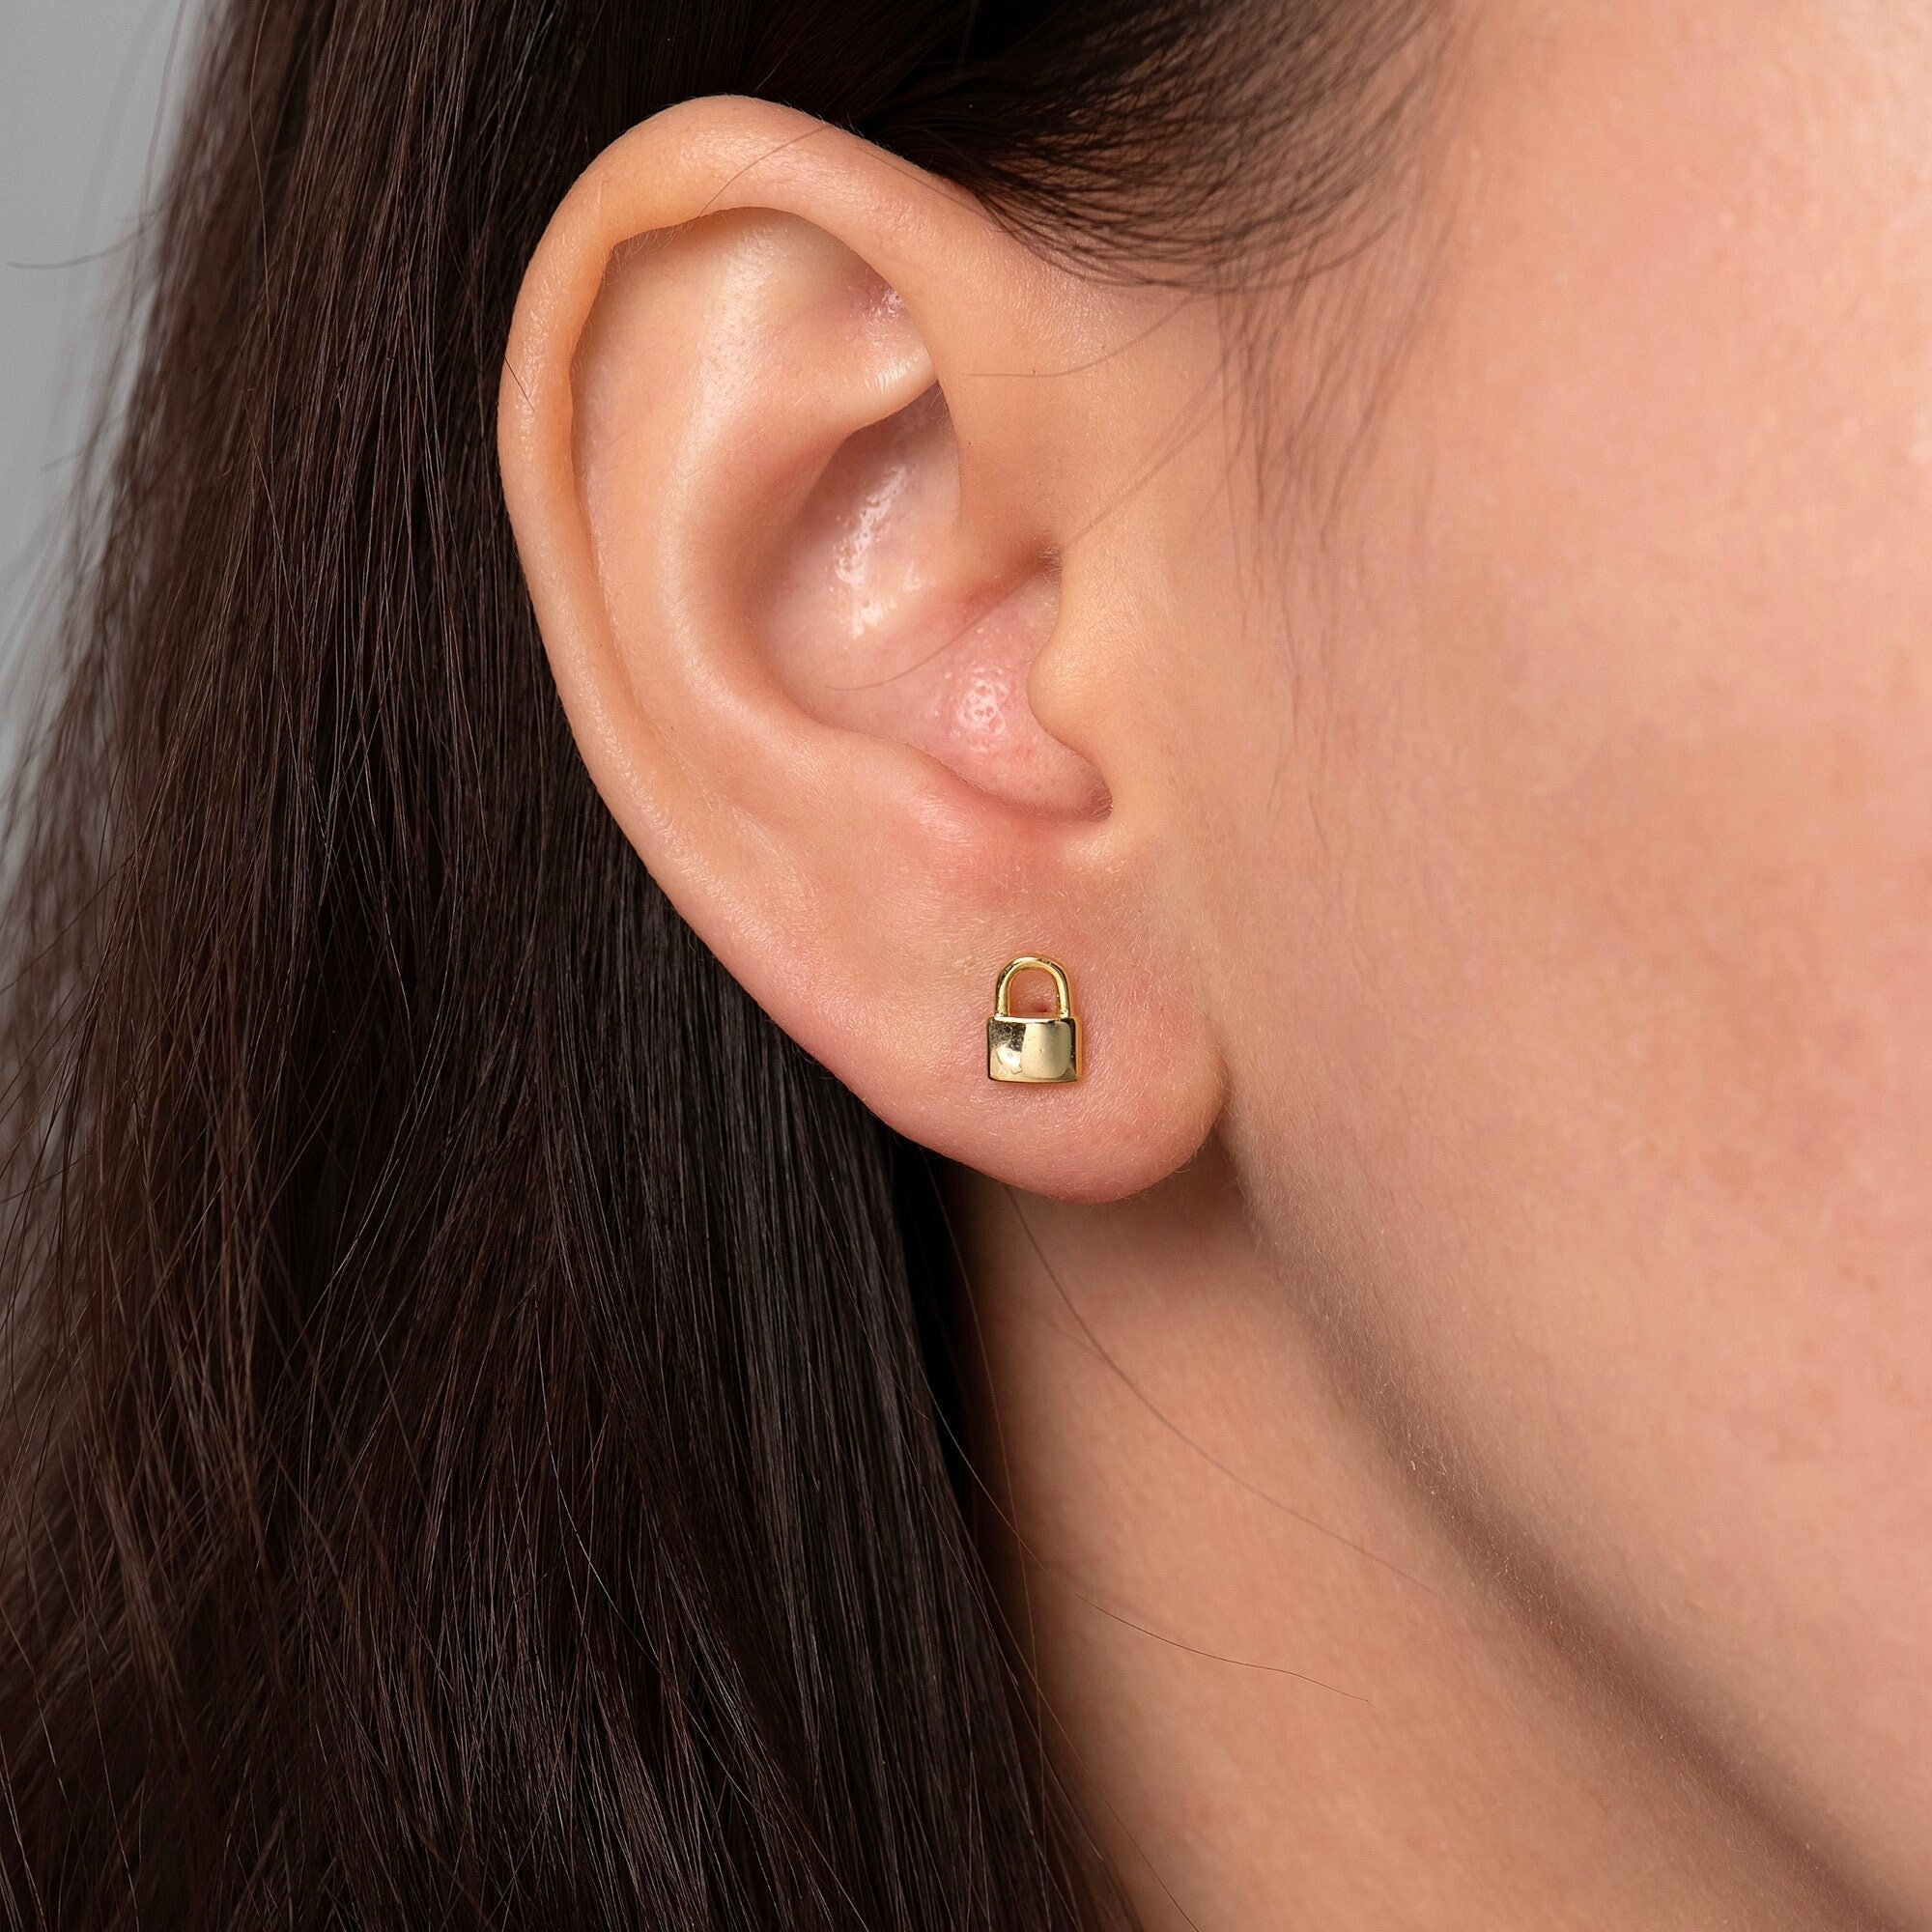 14K Gold Love Padlock Stud Earrings – Baby Gold